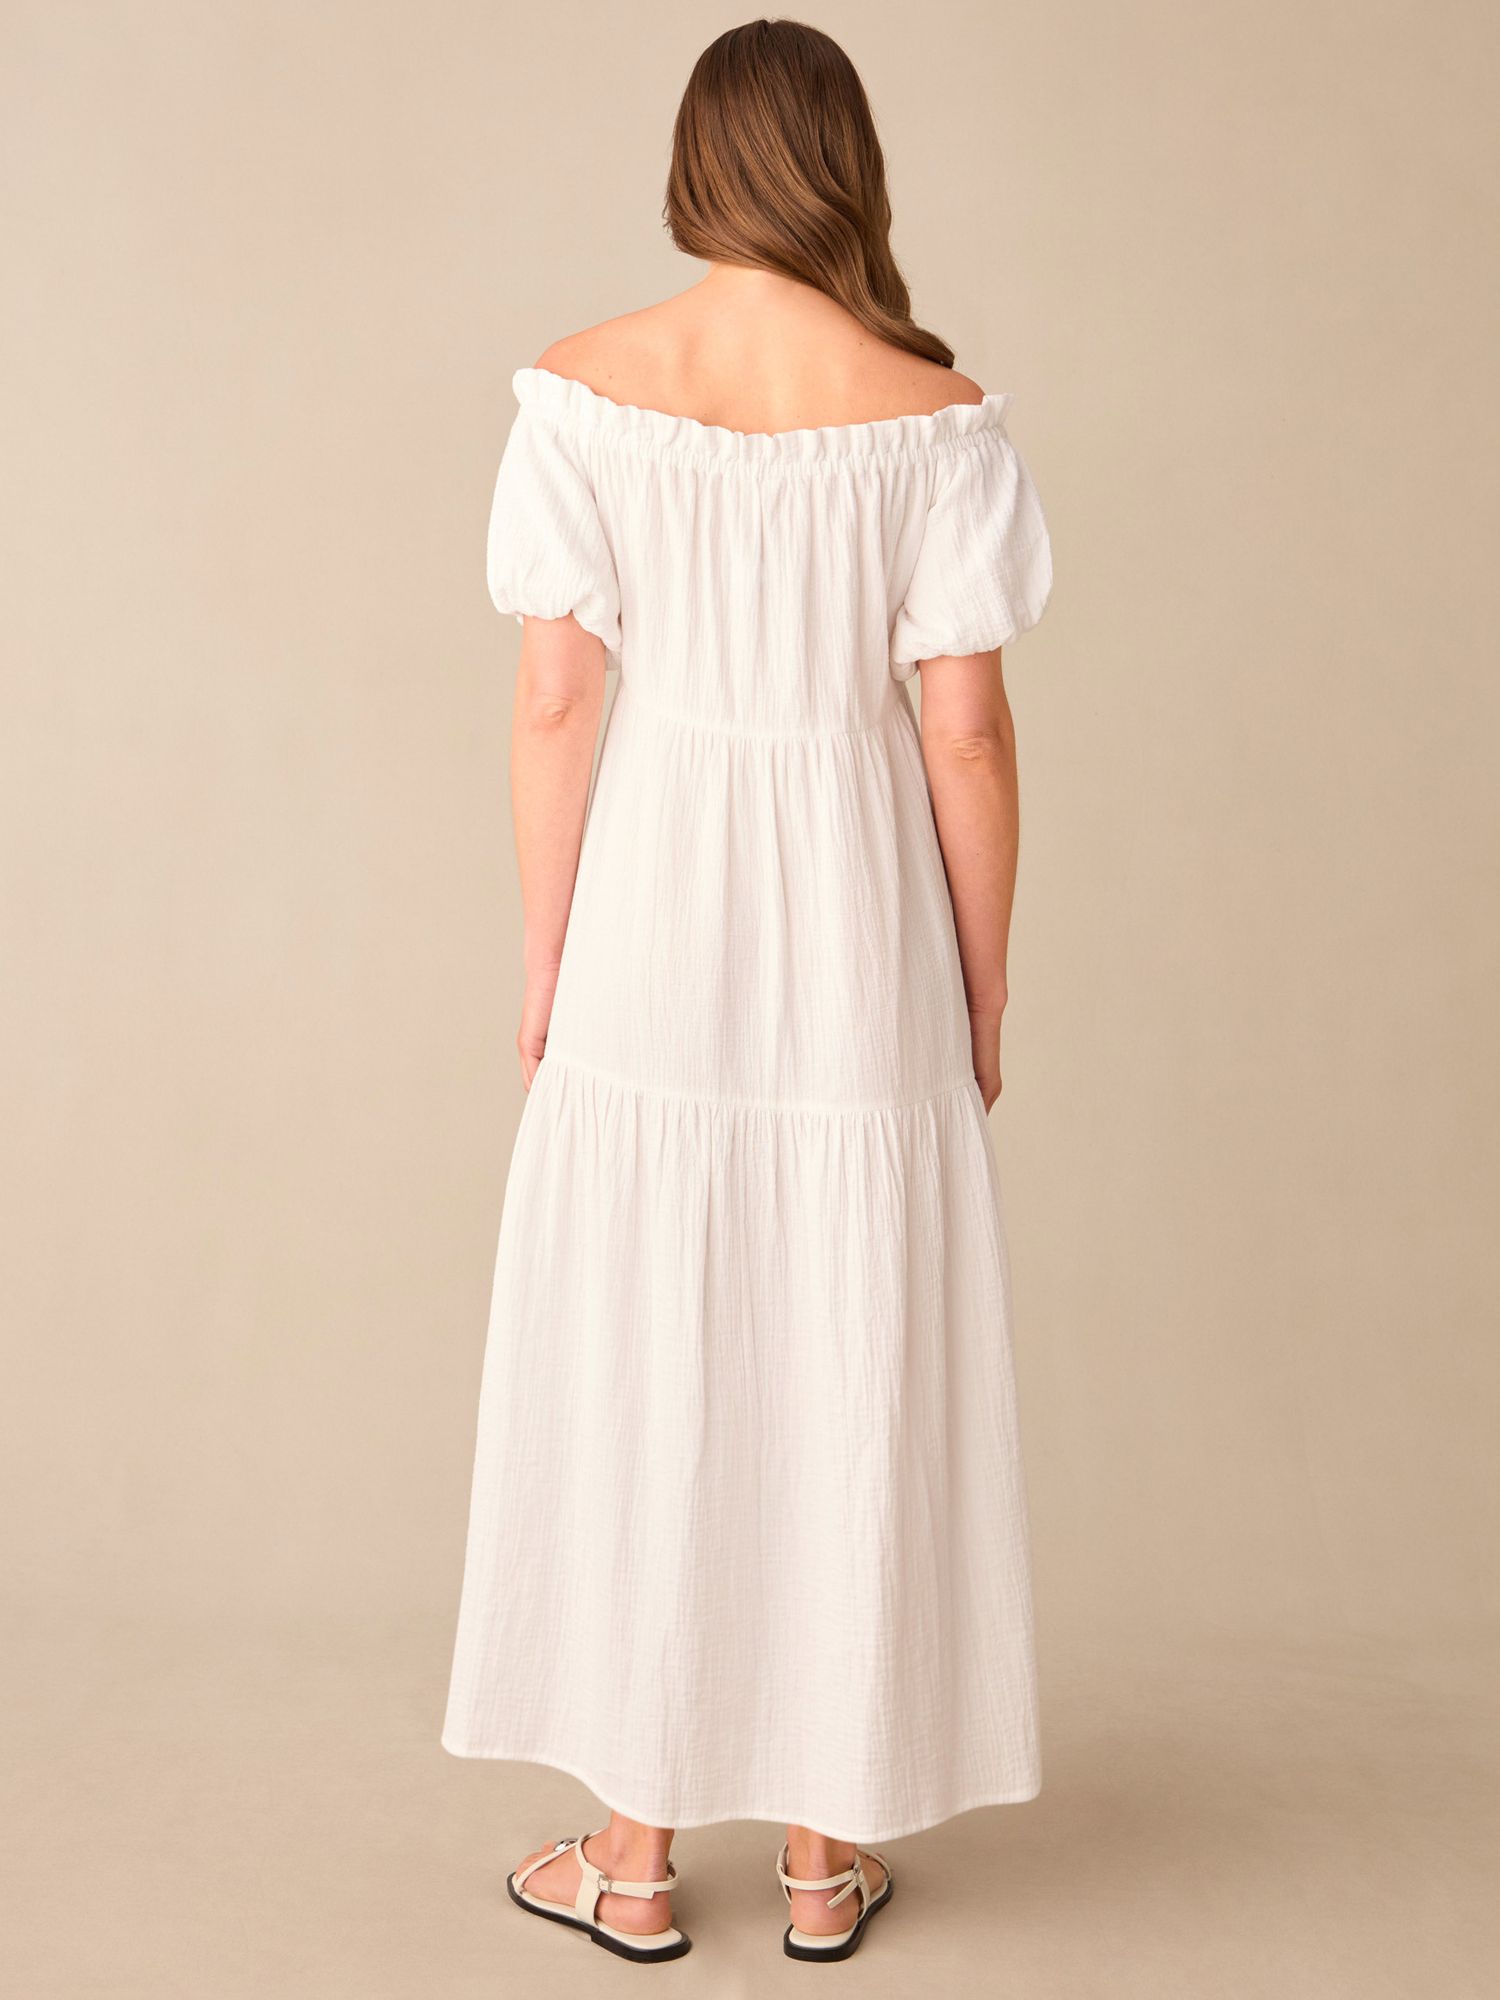 Ro&Zo Petite Frill Detail Cheesecloth Dress, White, 6